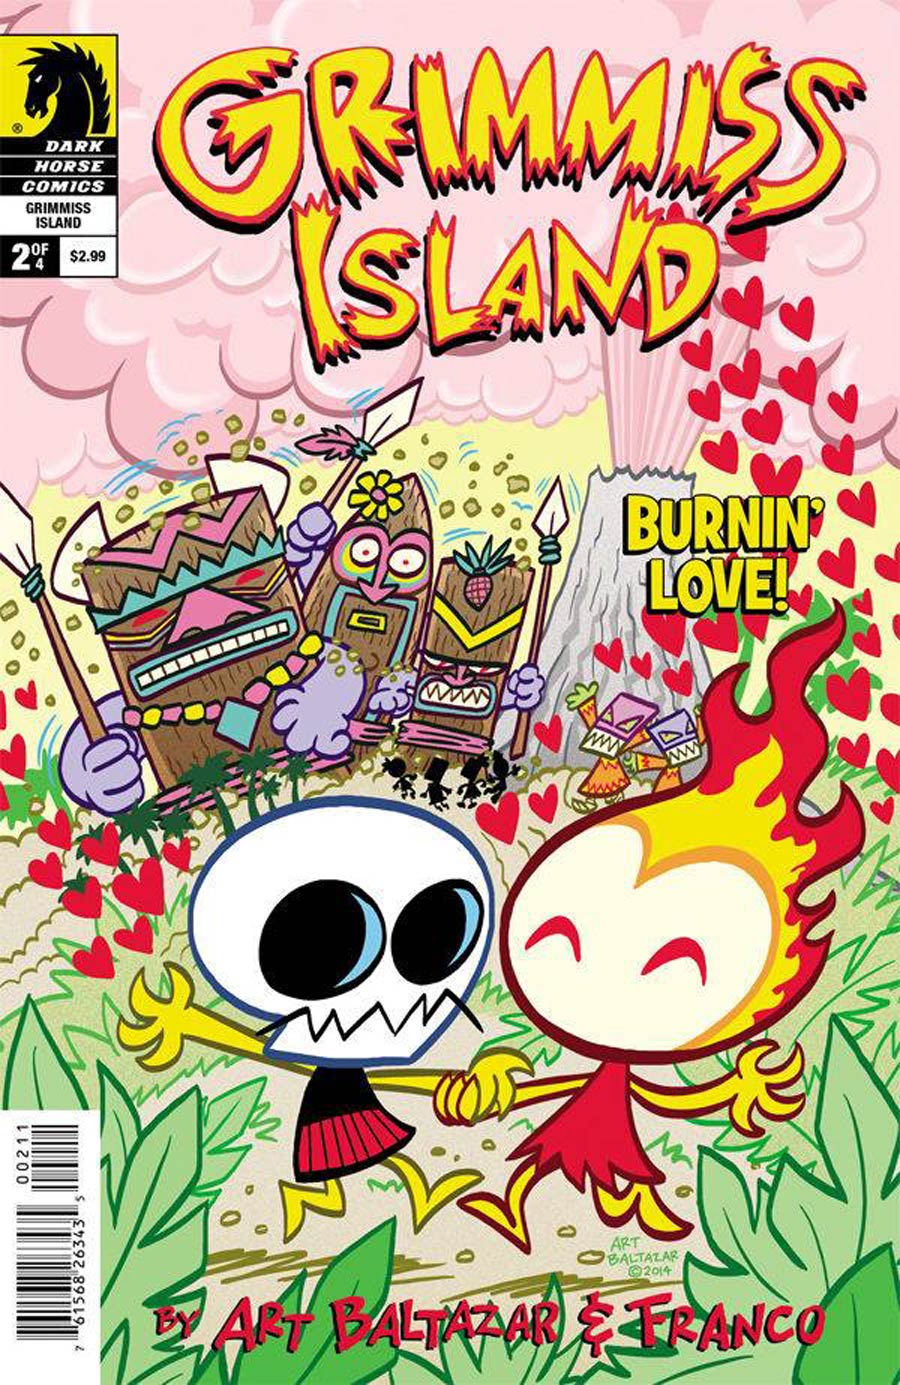 Itty Bitty Comics Grimmiss Island #2